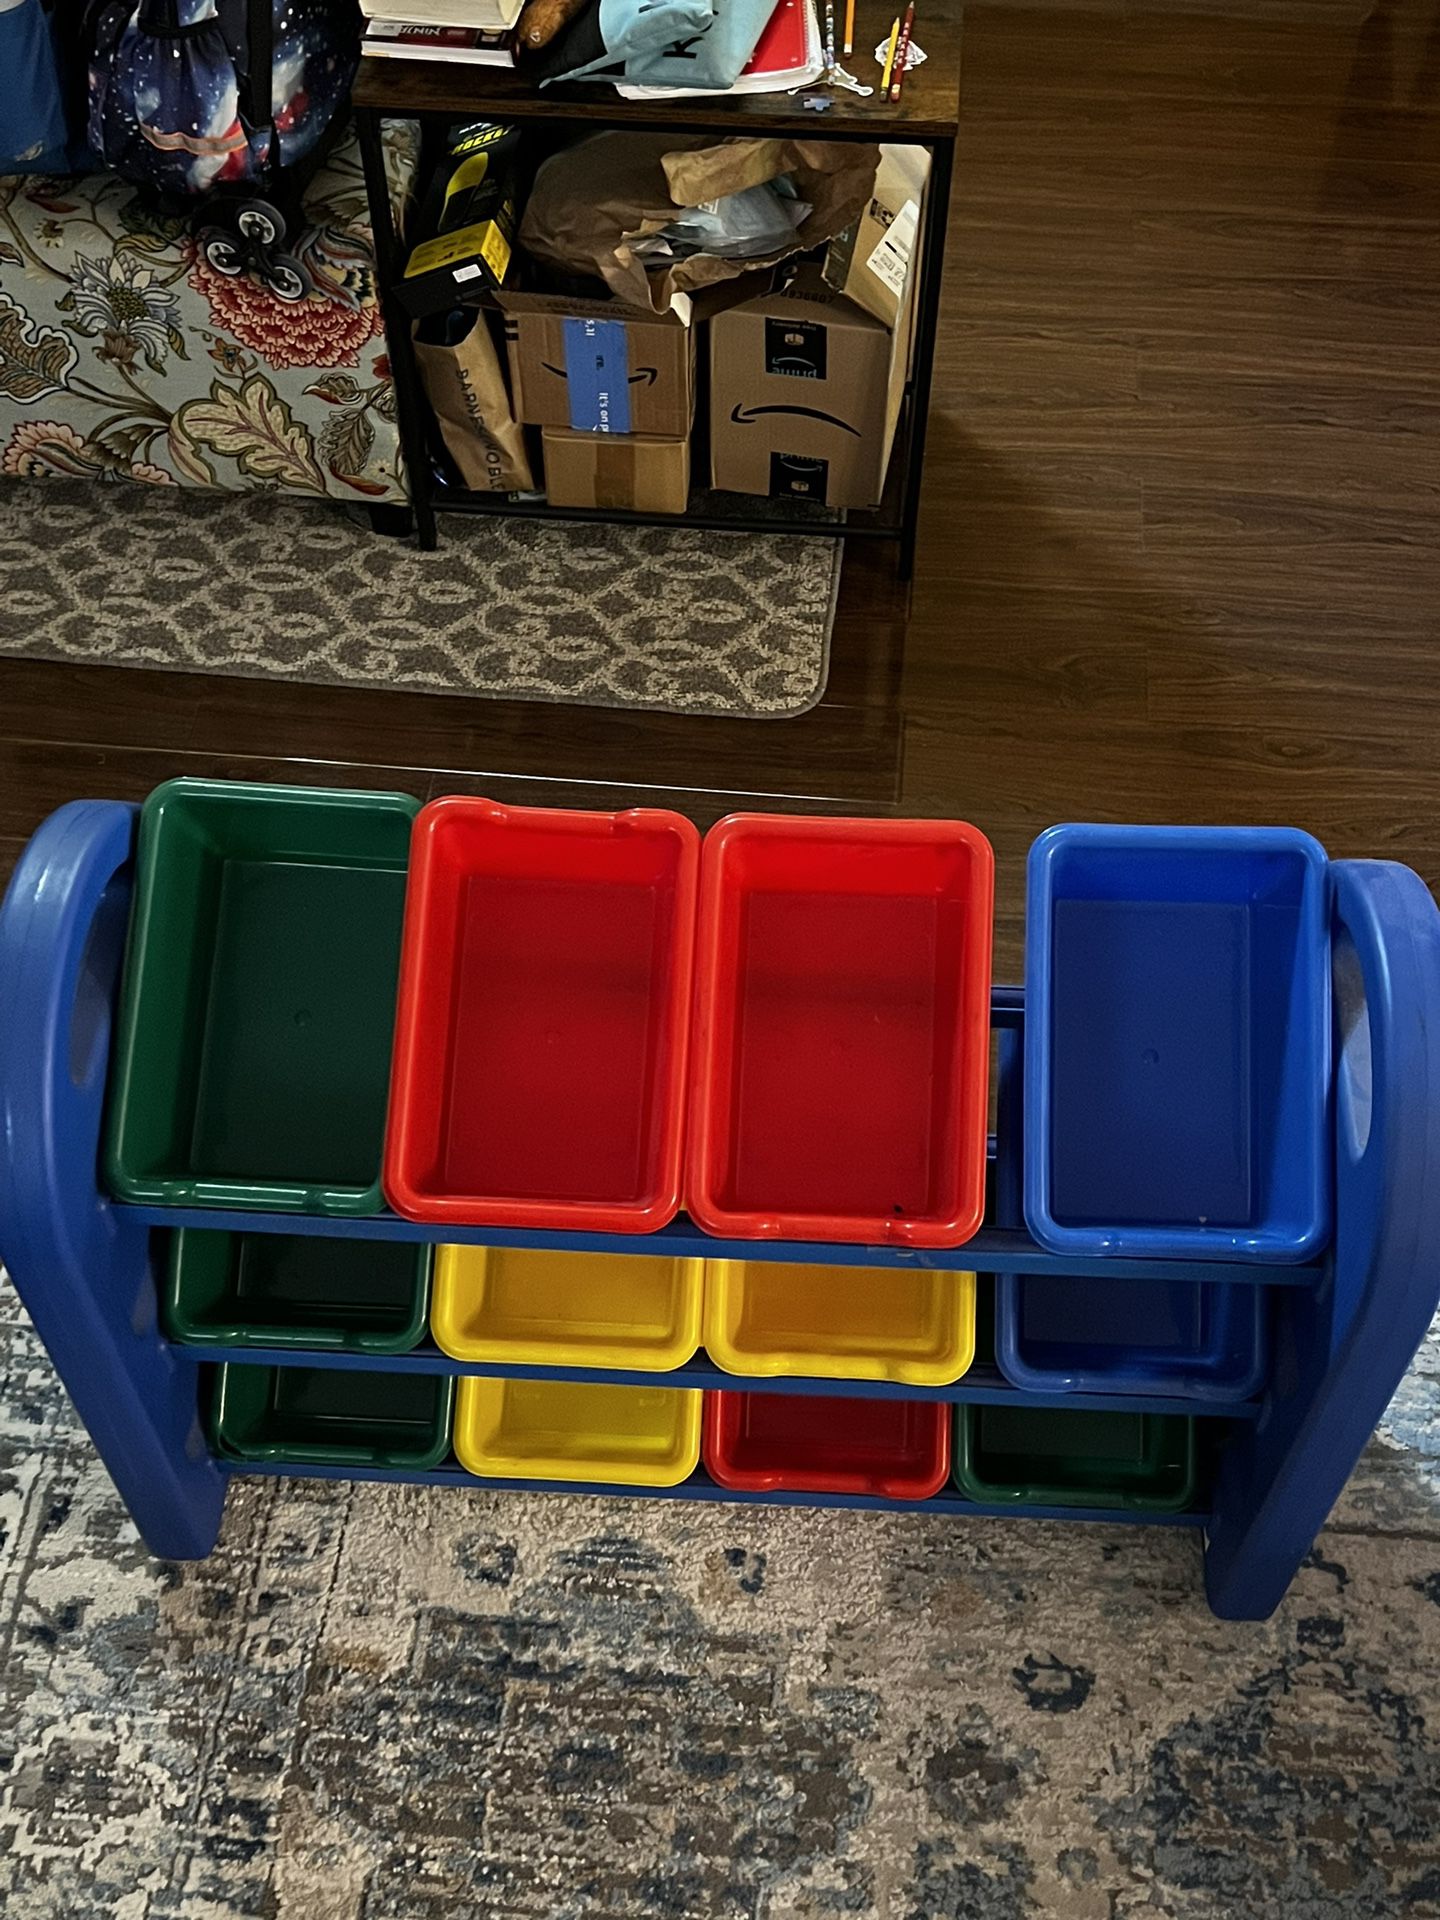 Children Toy Storage Shelf With Bins